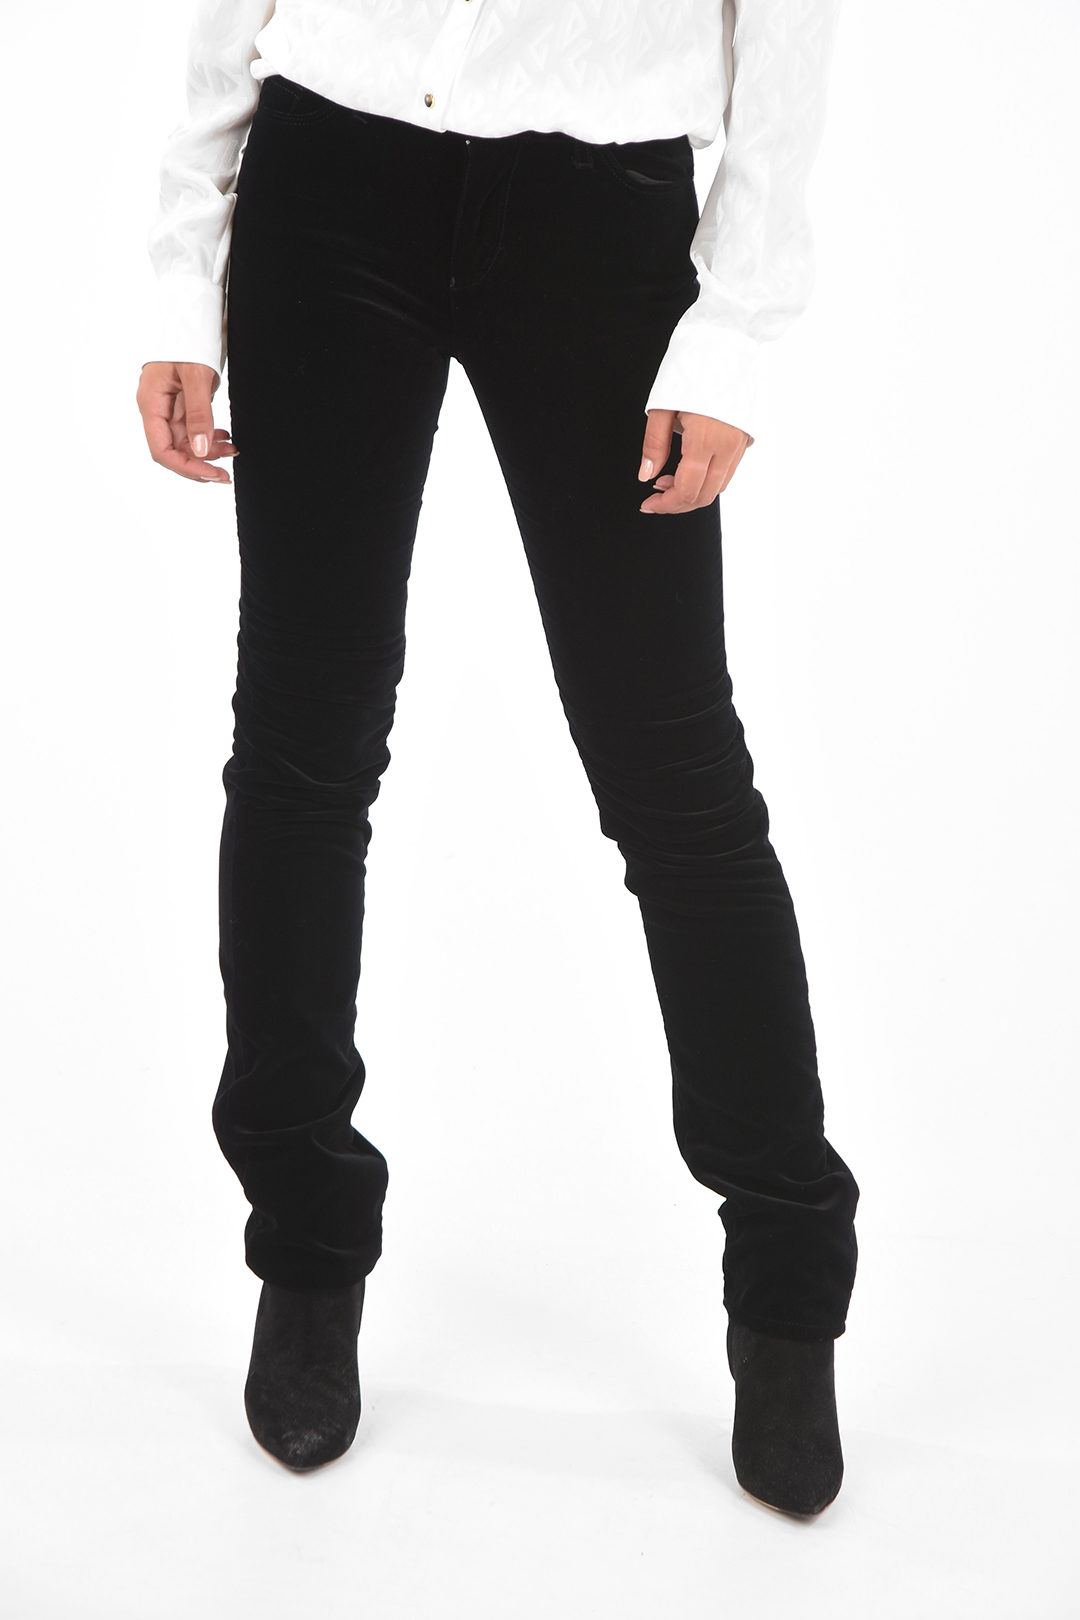 Armani EMPORIO ARMANI Velvet 5 Pocket Slim Fit Pants women - Glamood Outlet